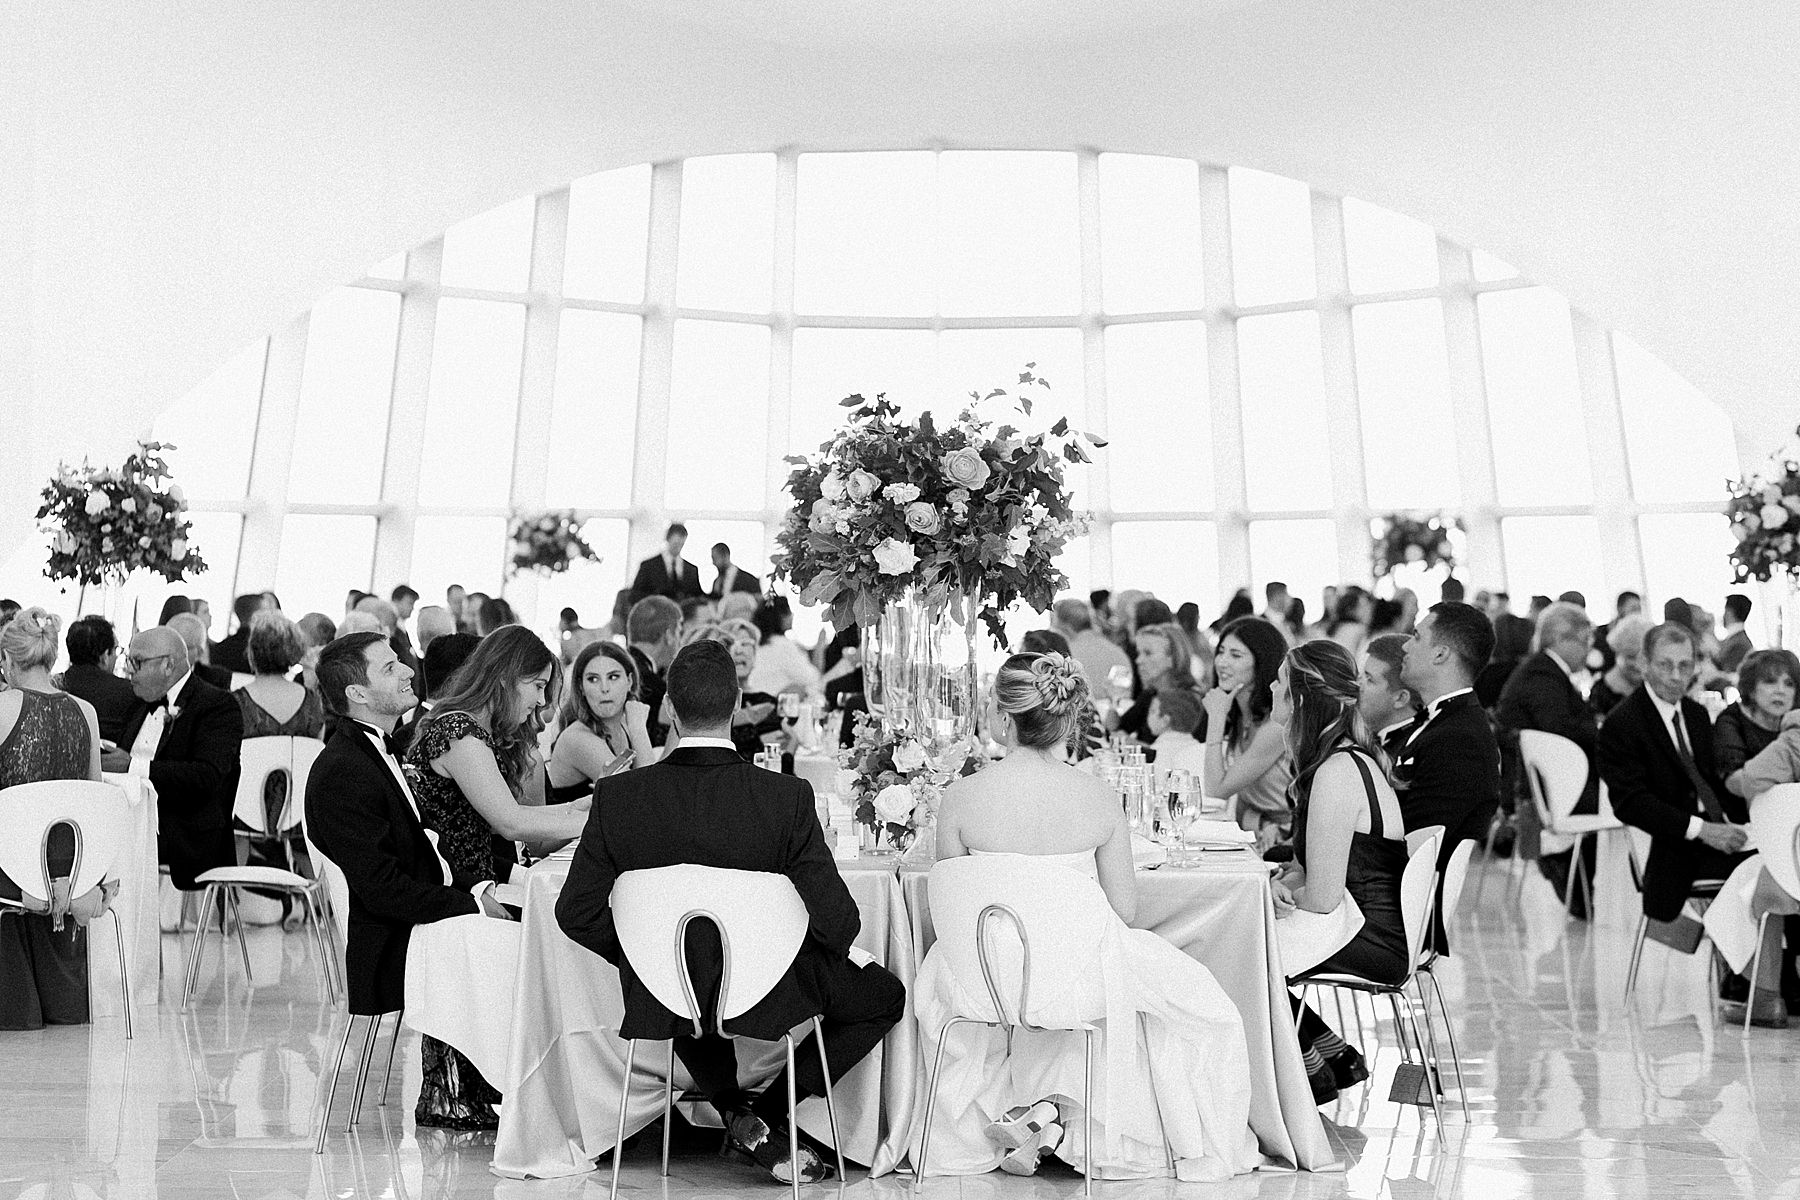 wedding dinner reception at milwaukee art museum modern architectural gem on lake michigan in downtown